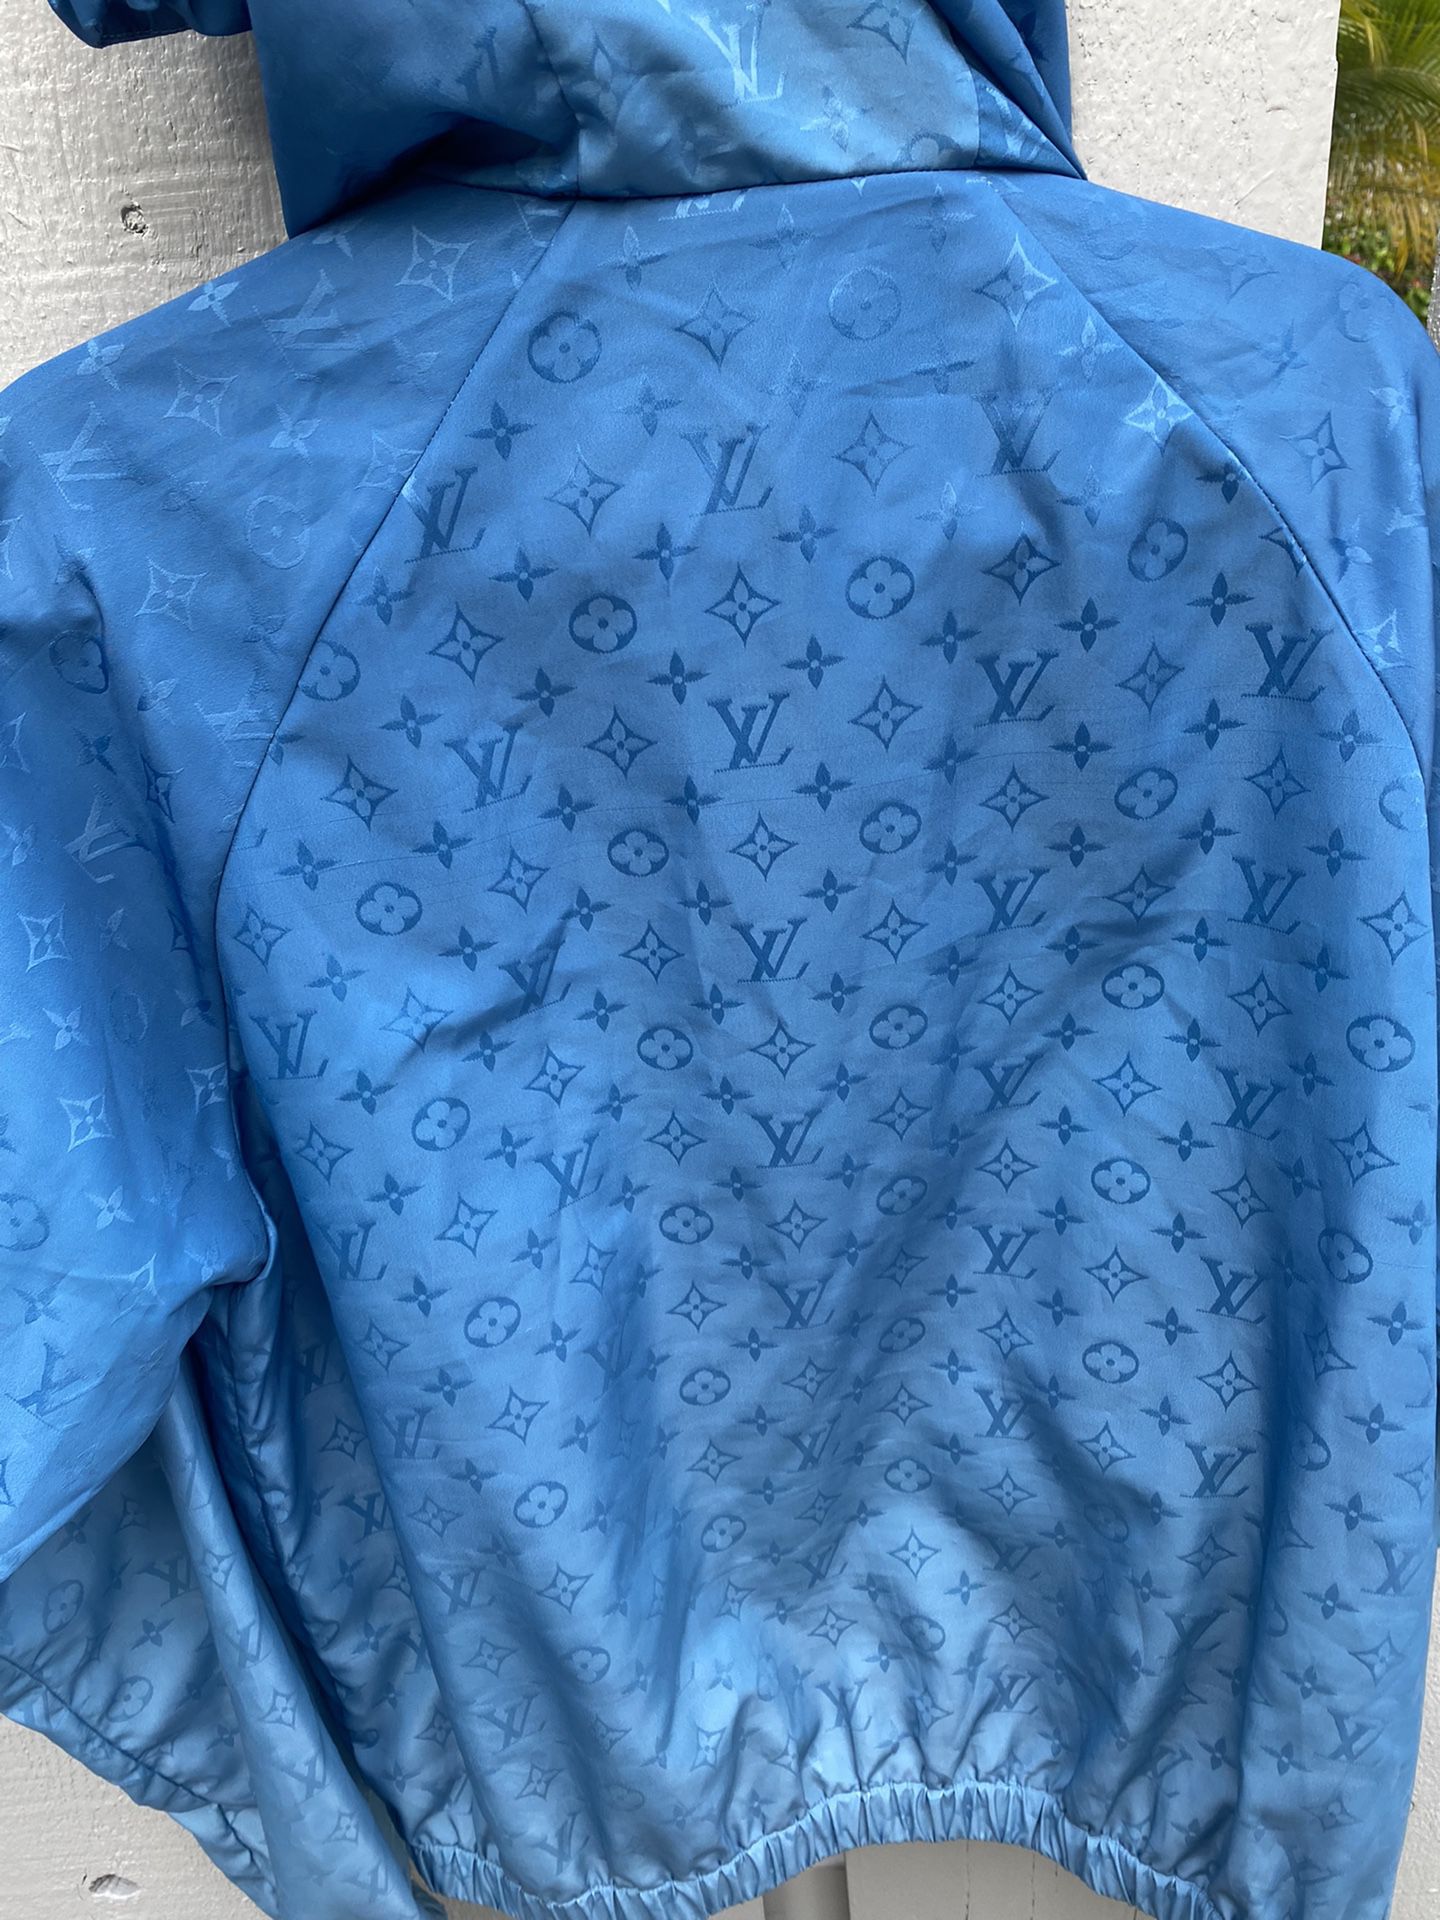 vuitton reflective jacket blue